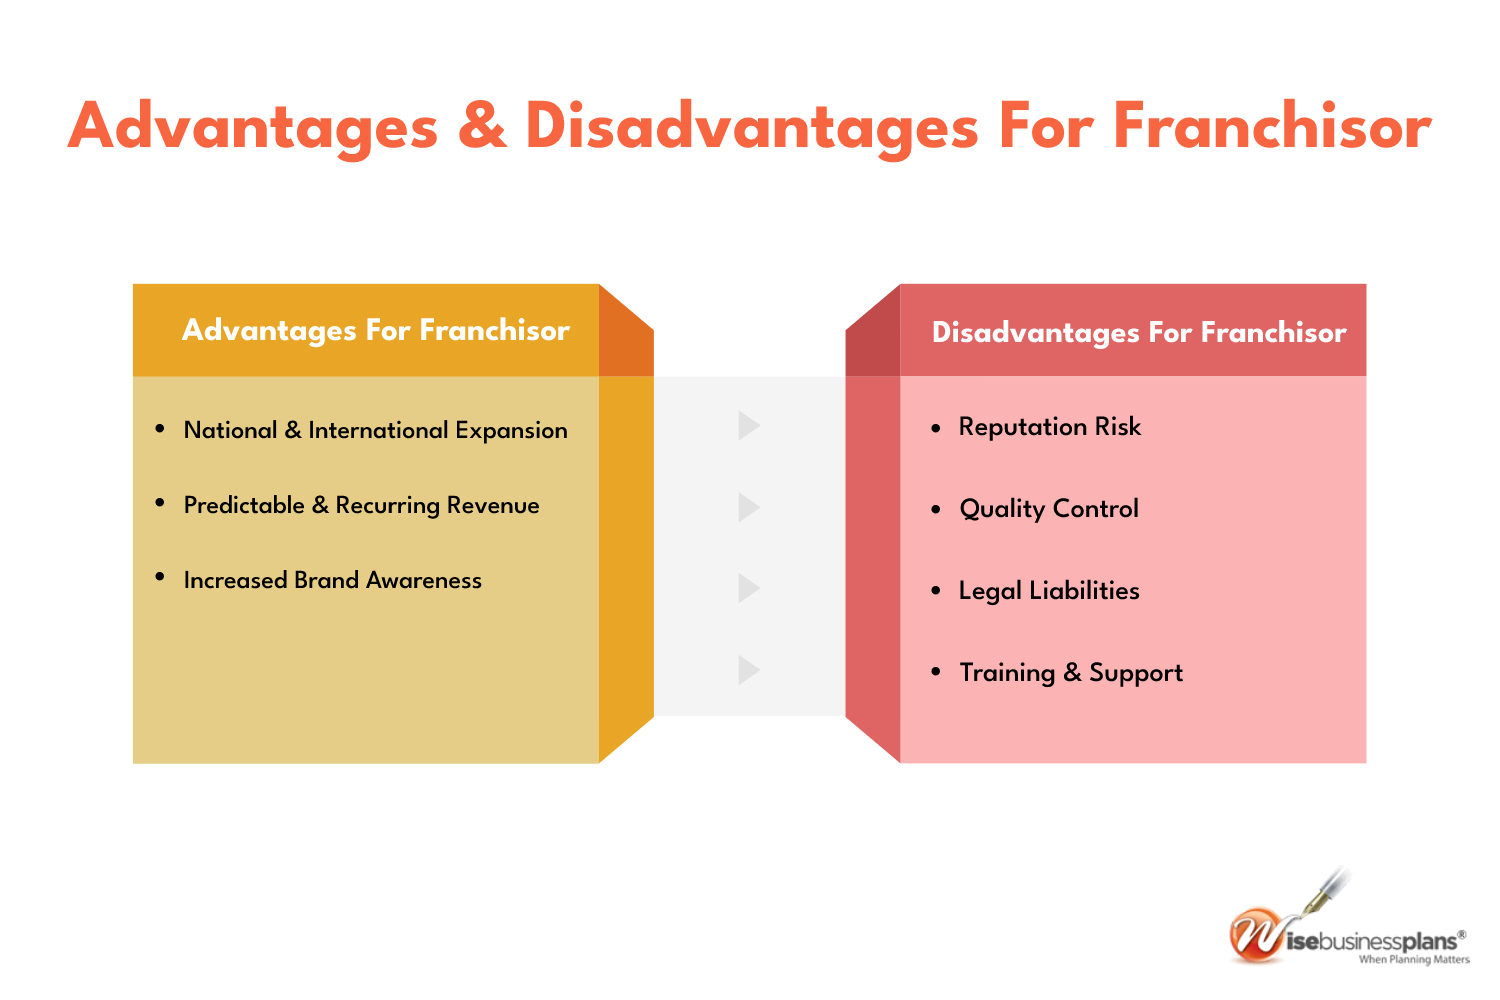 Advantages and disadvantages of franchising for franchisor